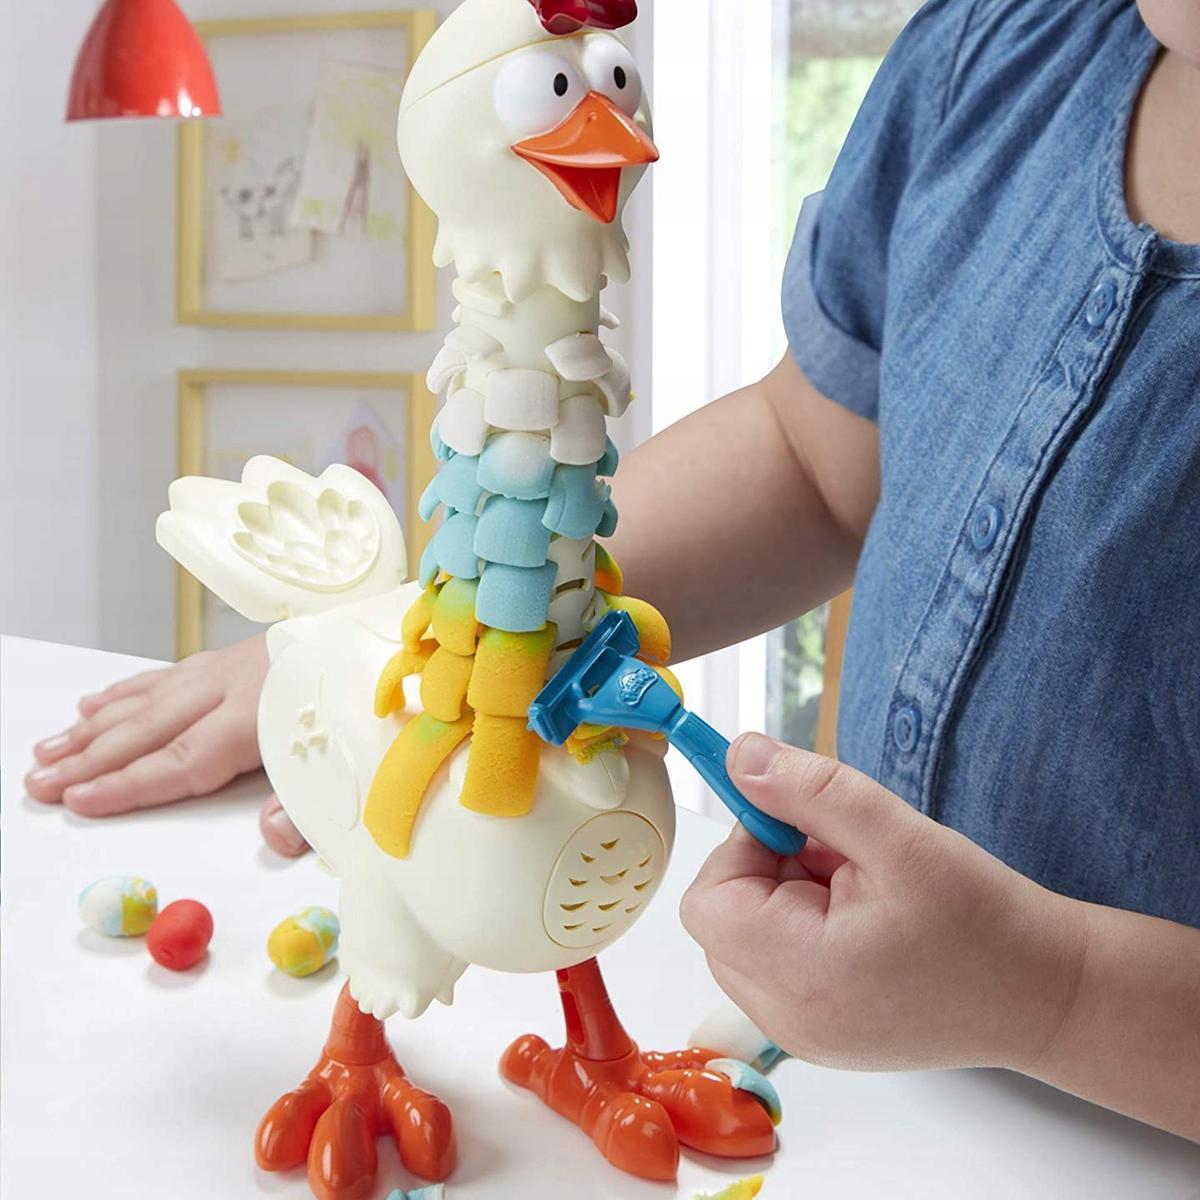 Ciastolina PLAY-DOH kurczak hasbro kura farma do zabawy dla dziecka  nr. 6